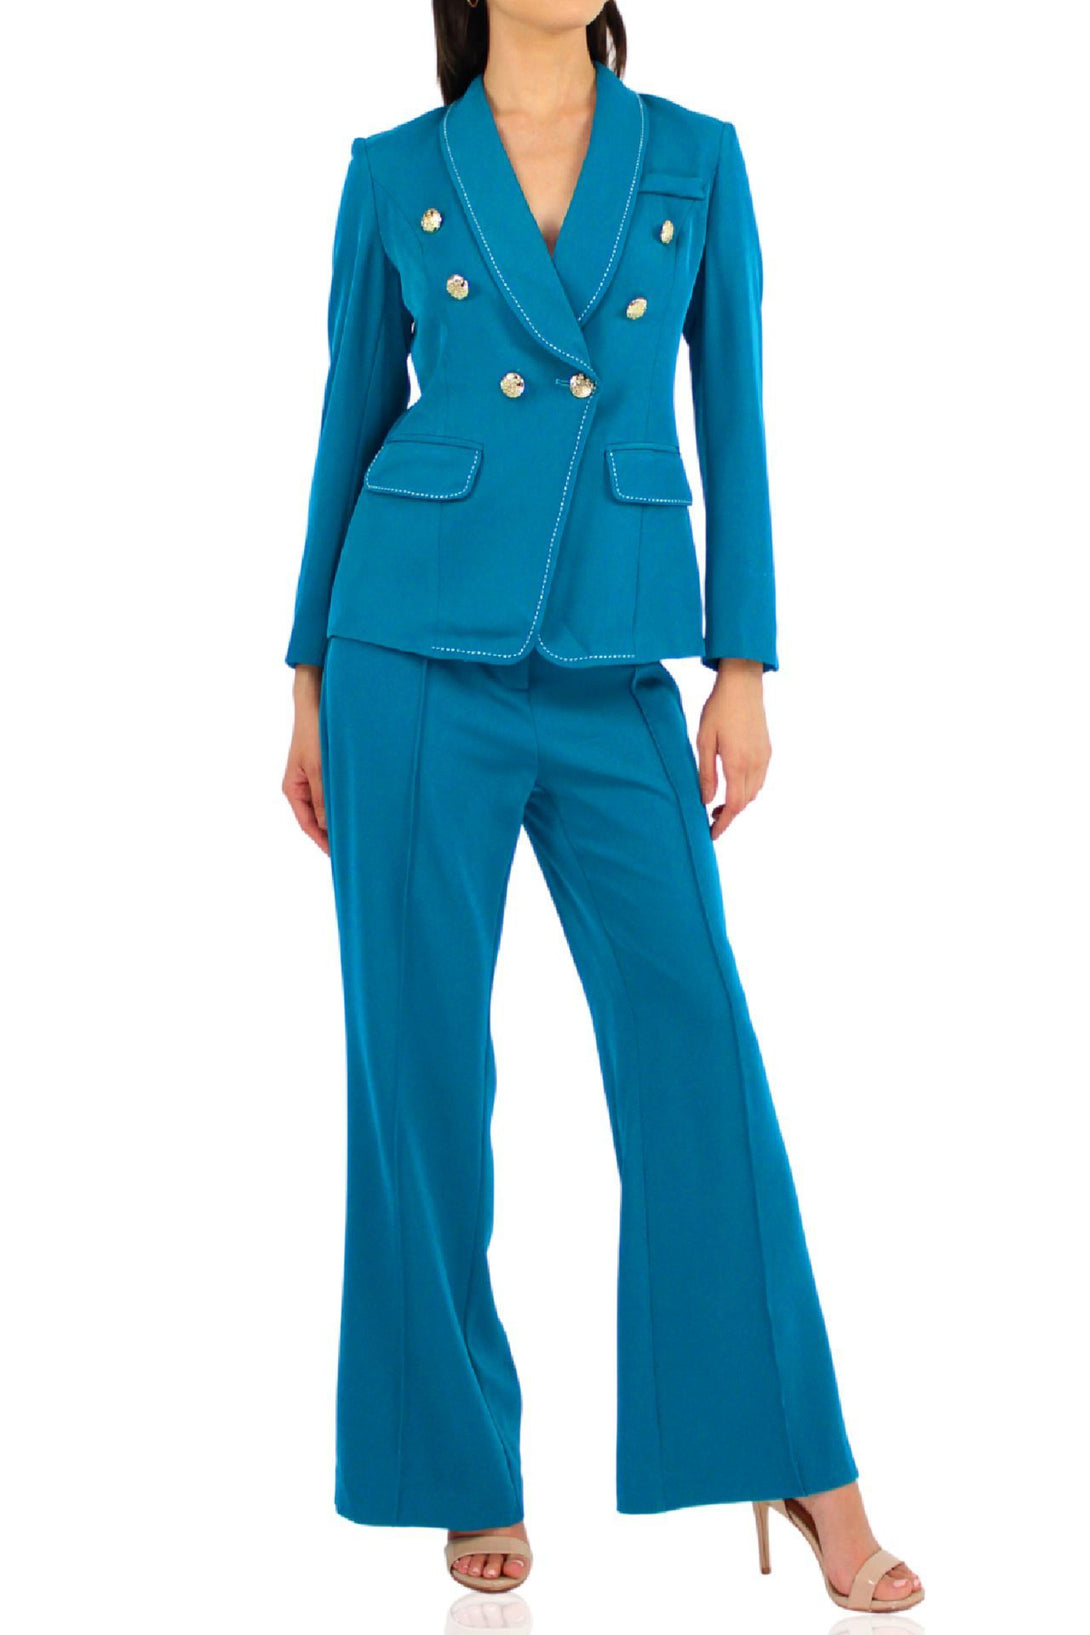 Silk-Designer-Blue-Matching-Suit-Set-By-Kyle-Richard